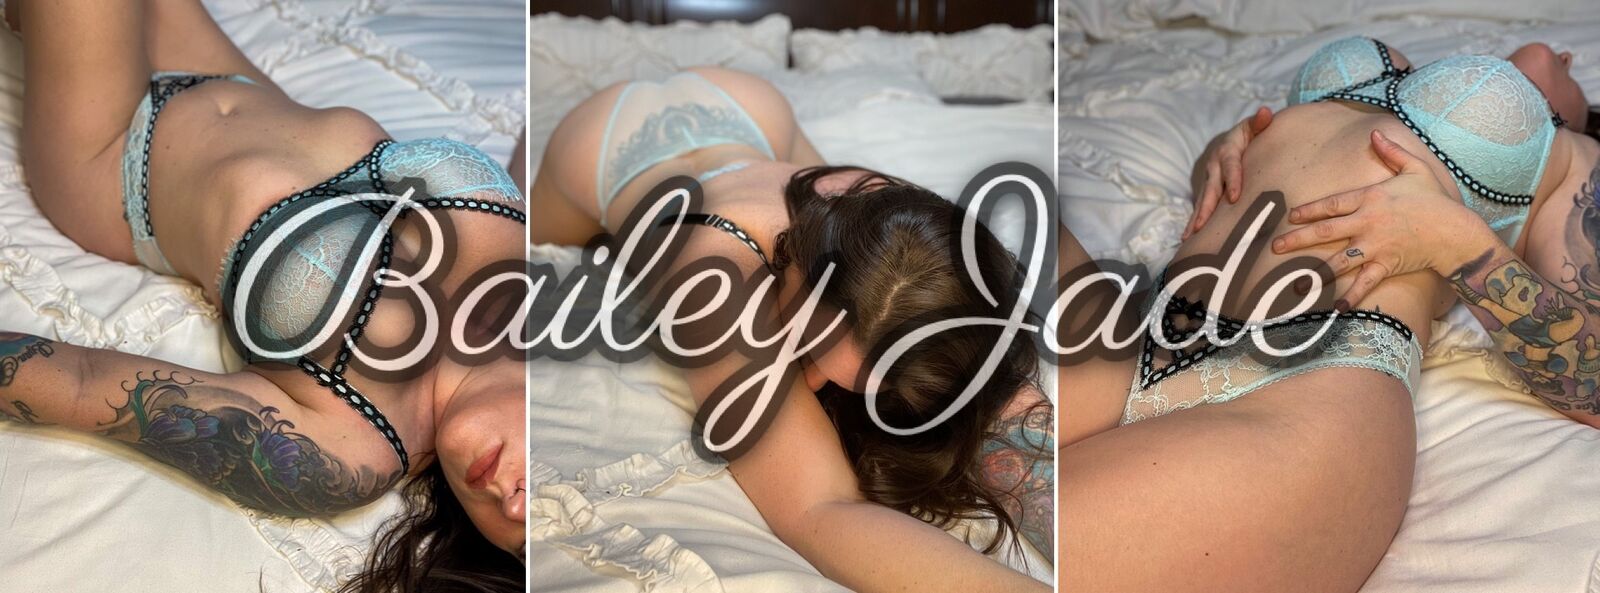 See Bailey Jade profile